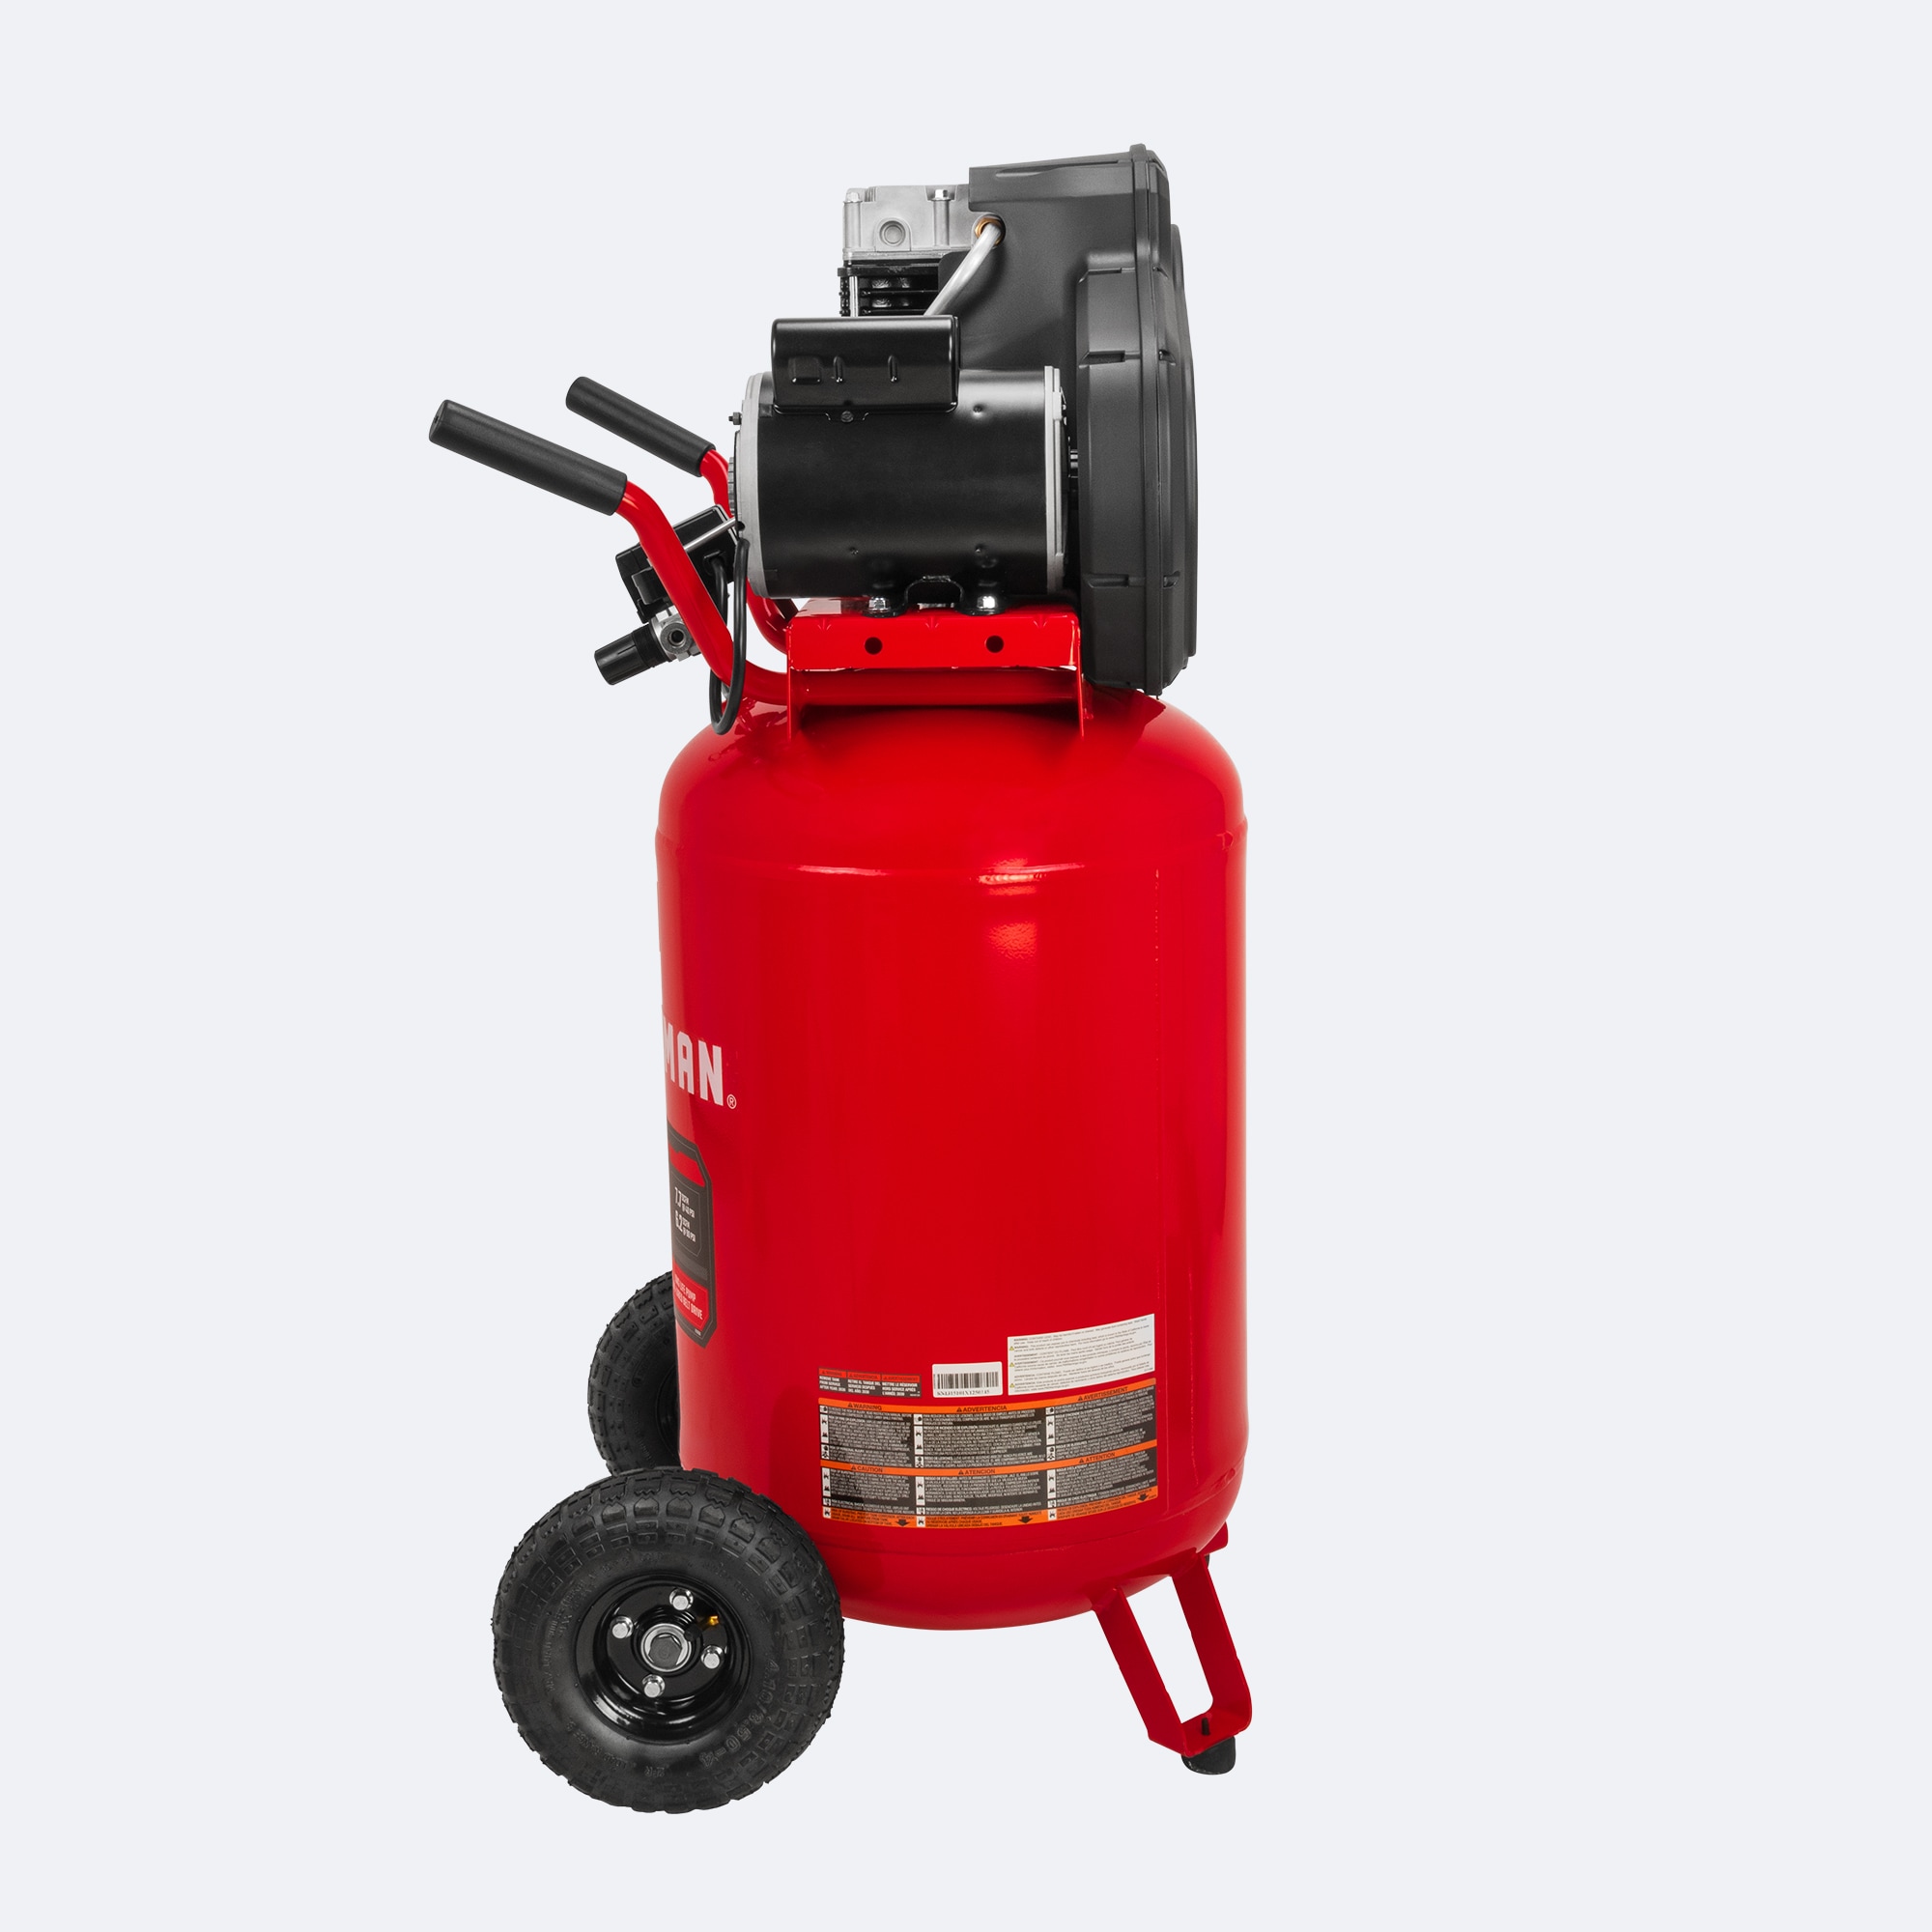 Craftsman 5hp 20 gallon compressor with air hose & reel